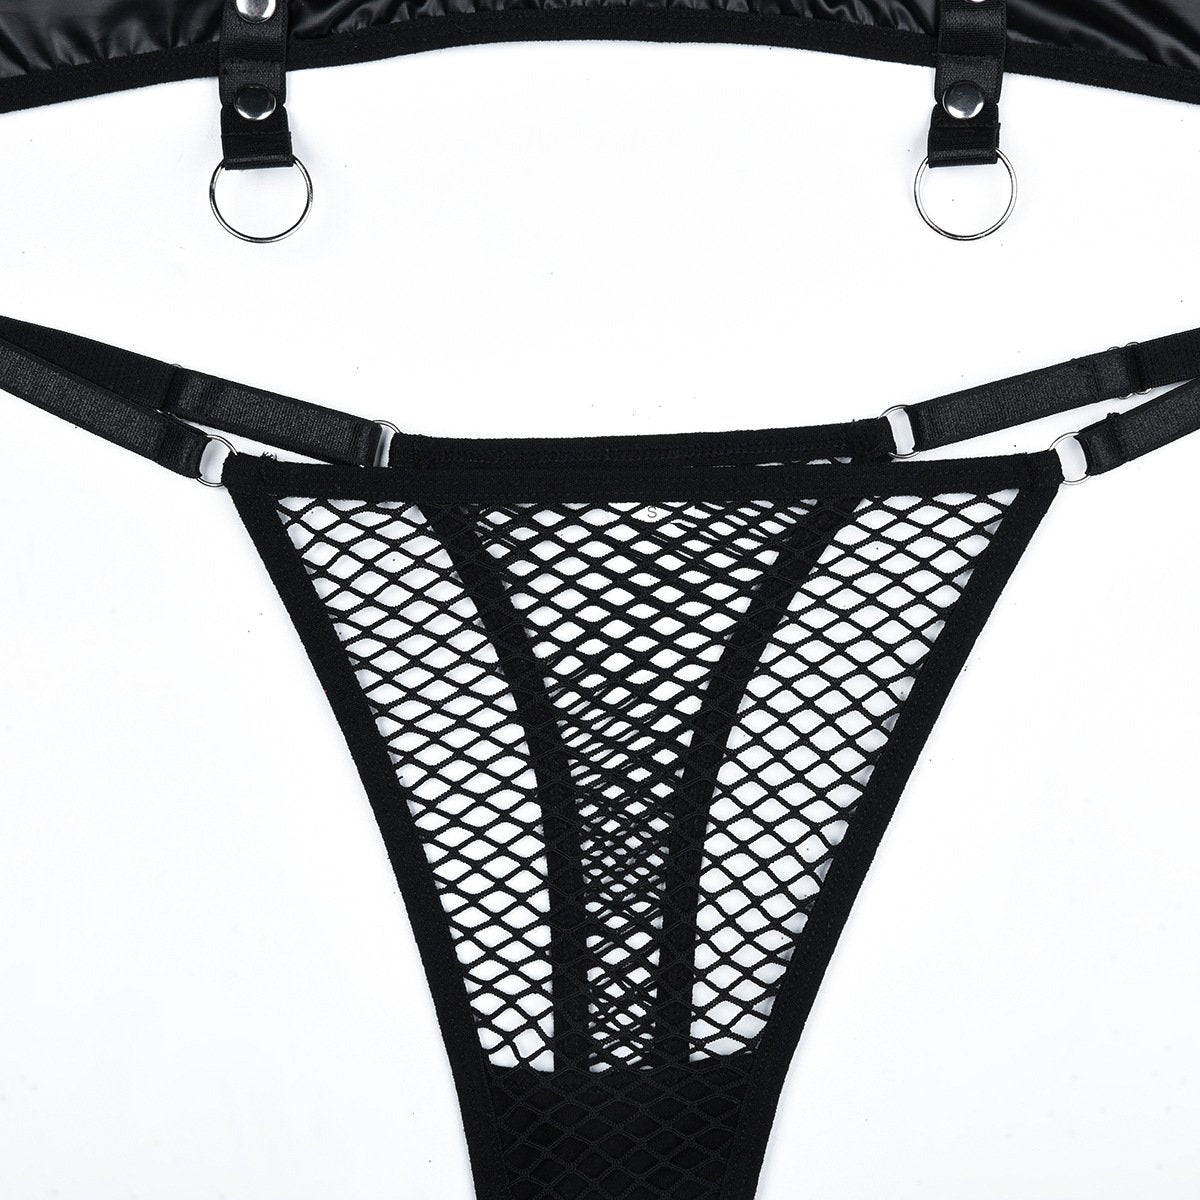 PU leather fishnet patchwork choker lingerie set